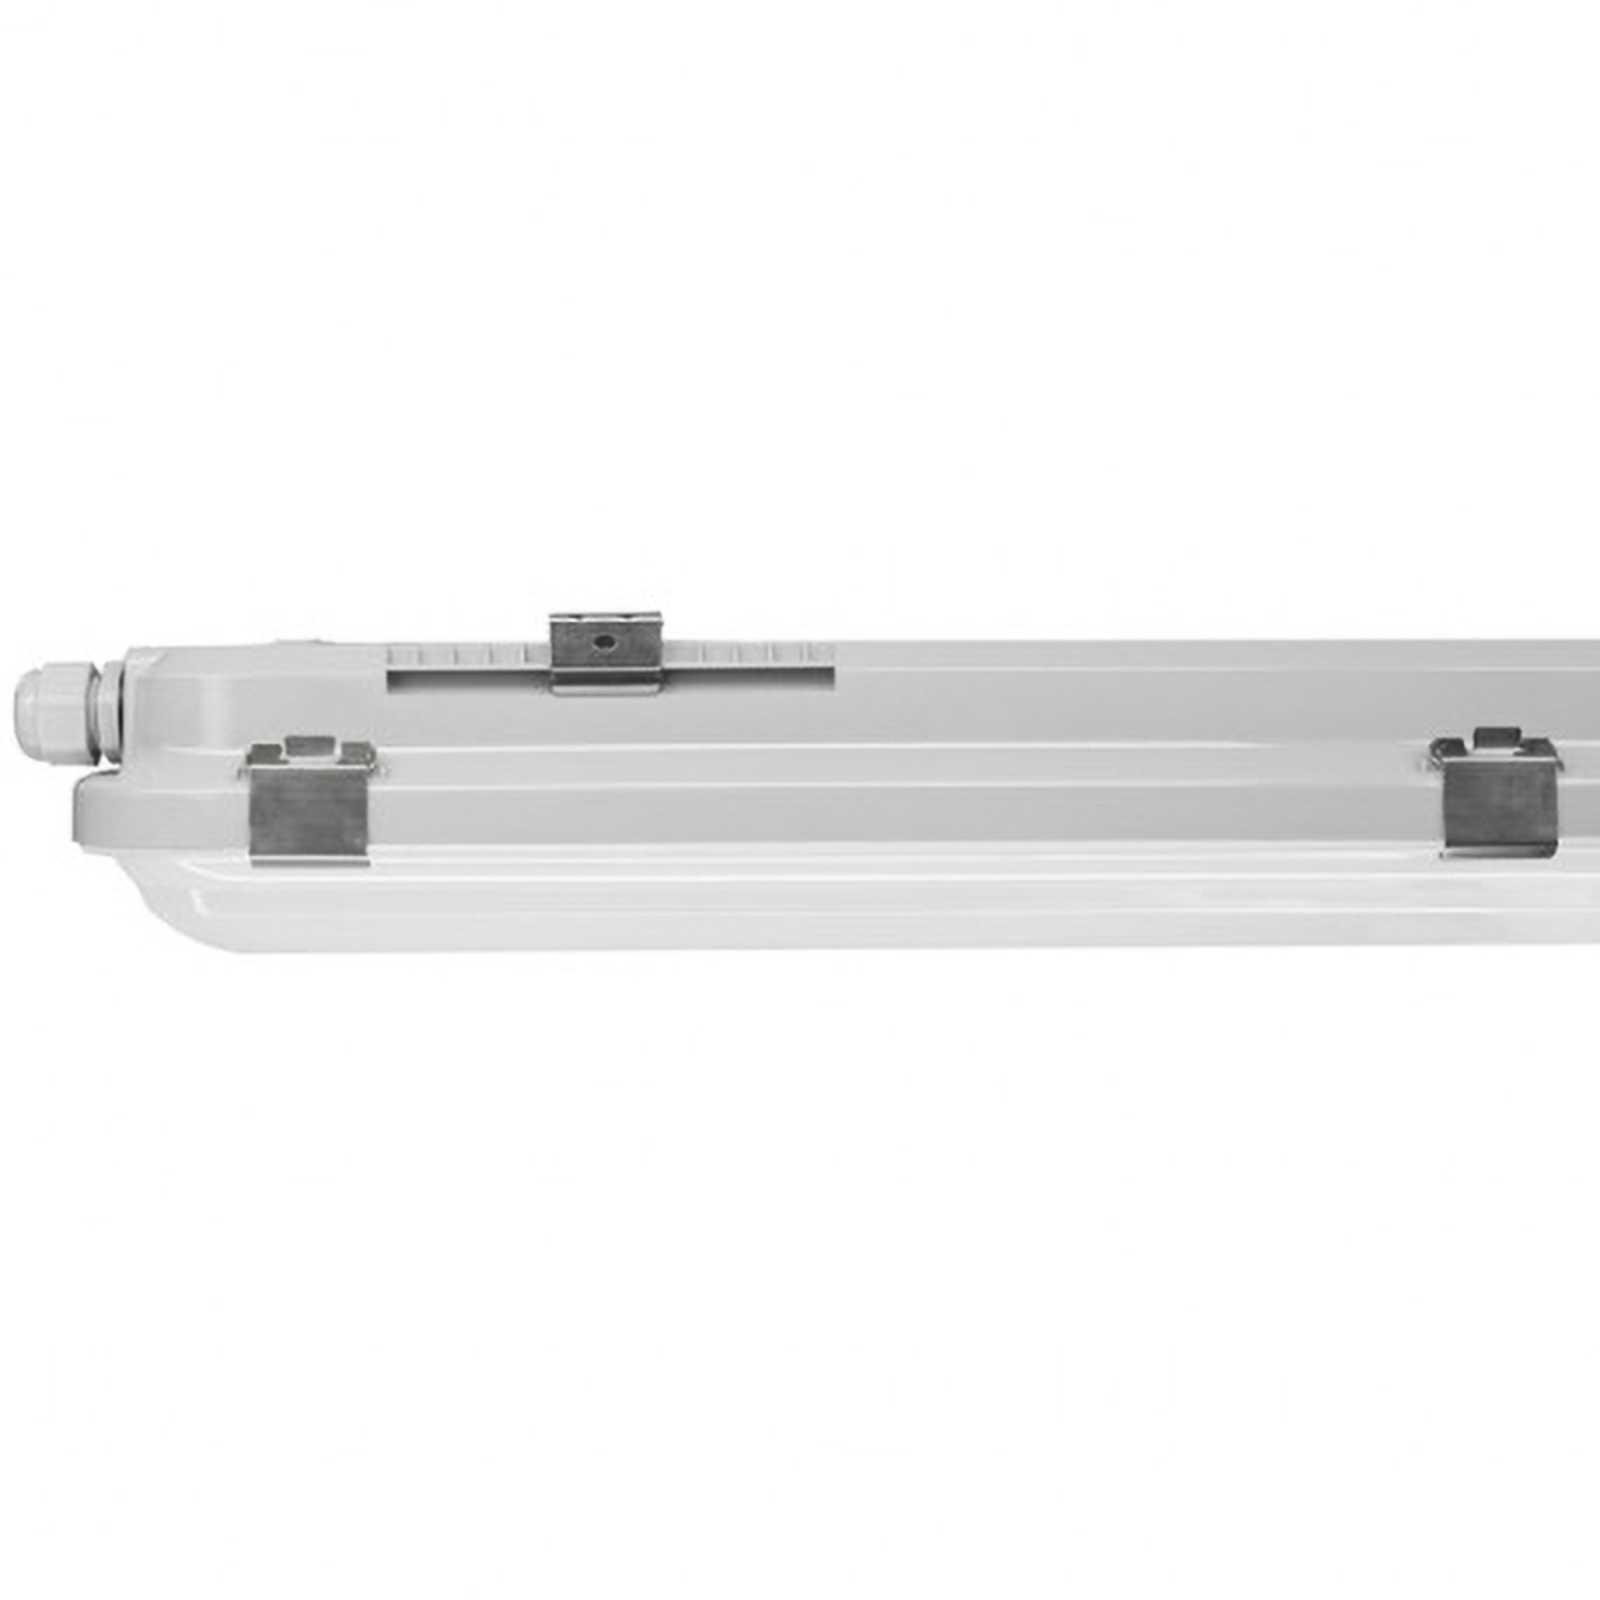 InnoGreen AQUOS 3.0 BASELine LED-Leuchte 122cm 850